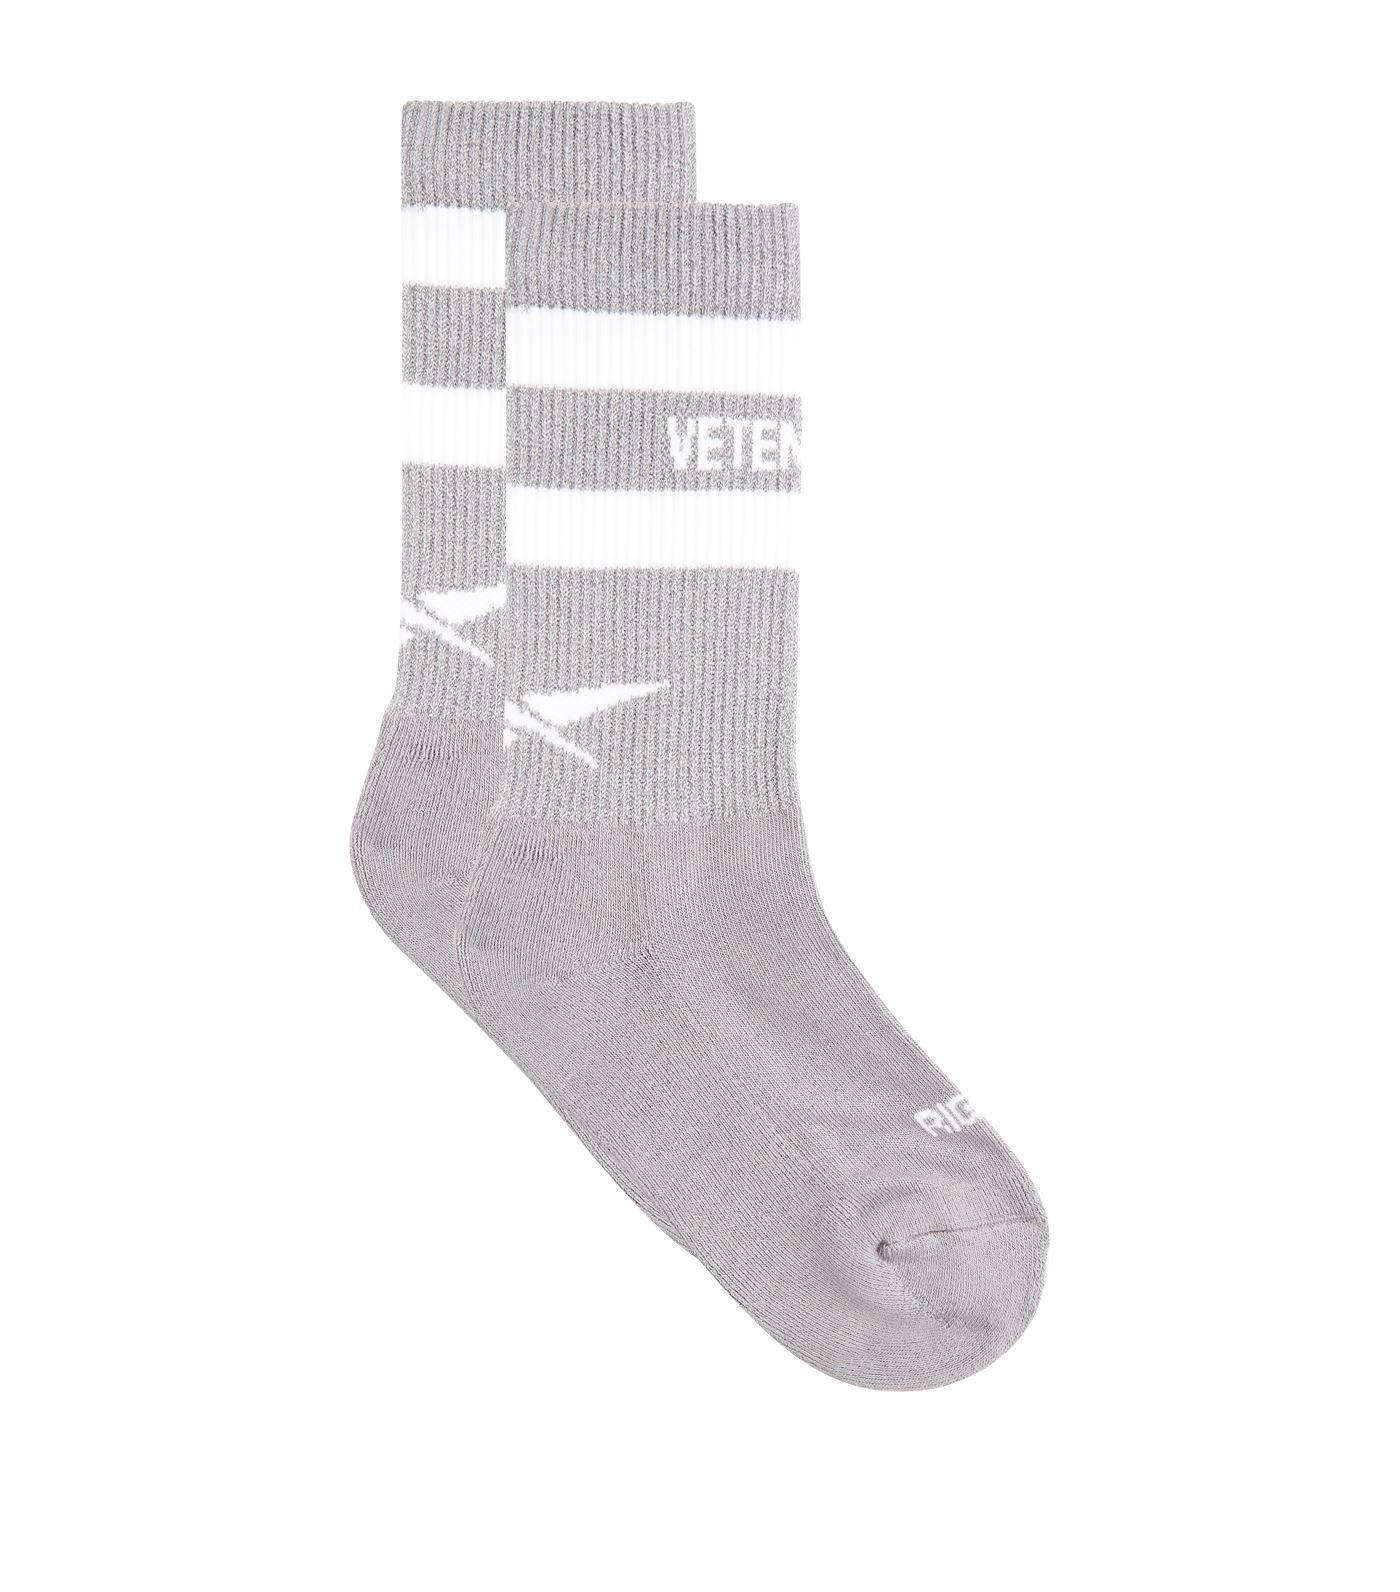 Vetements X Reebok Reflective Socks In 